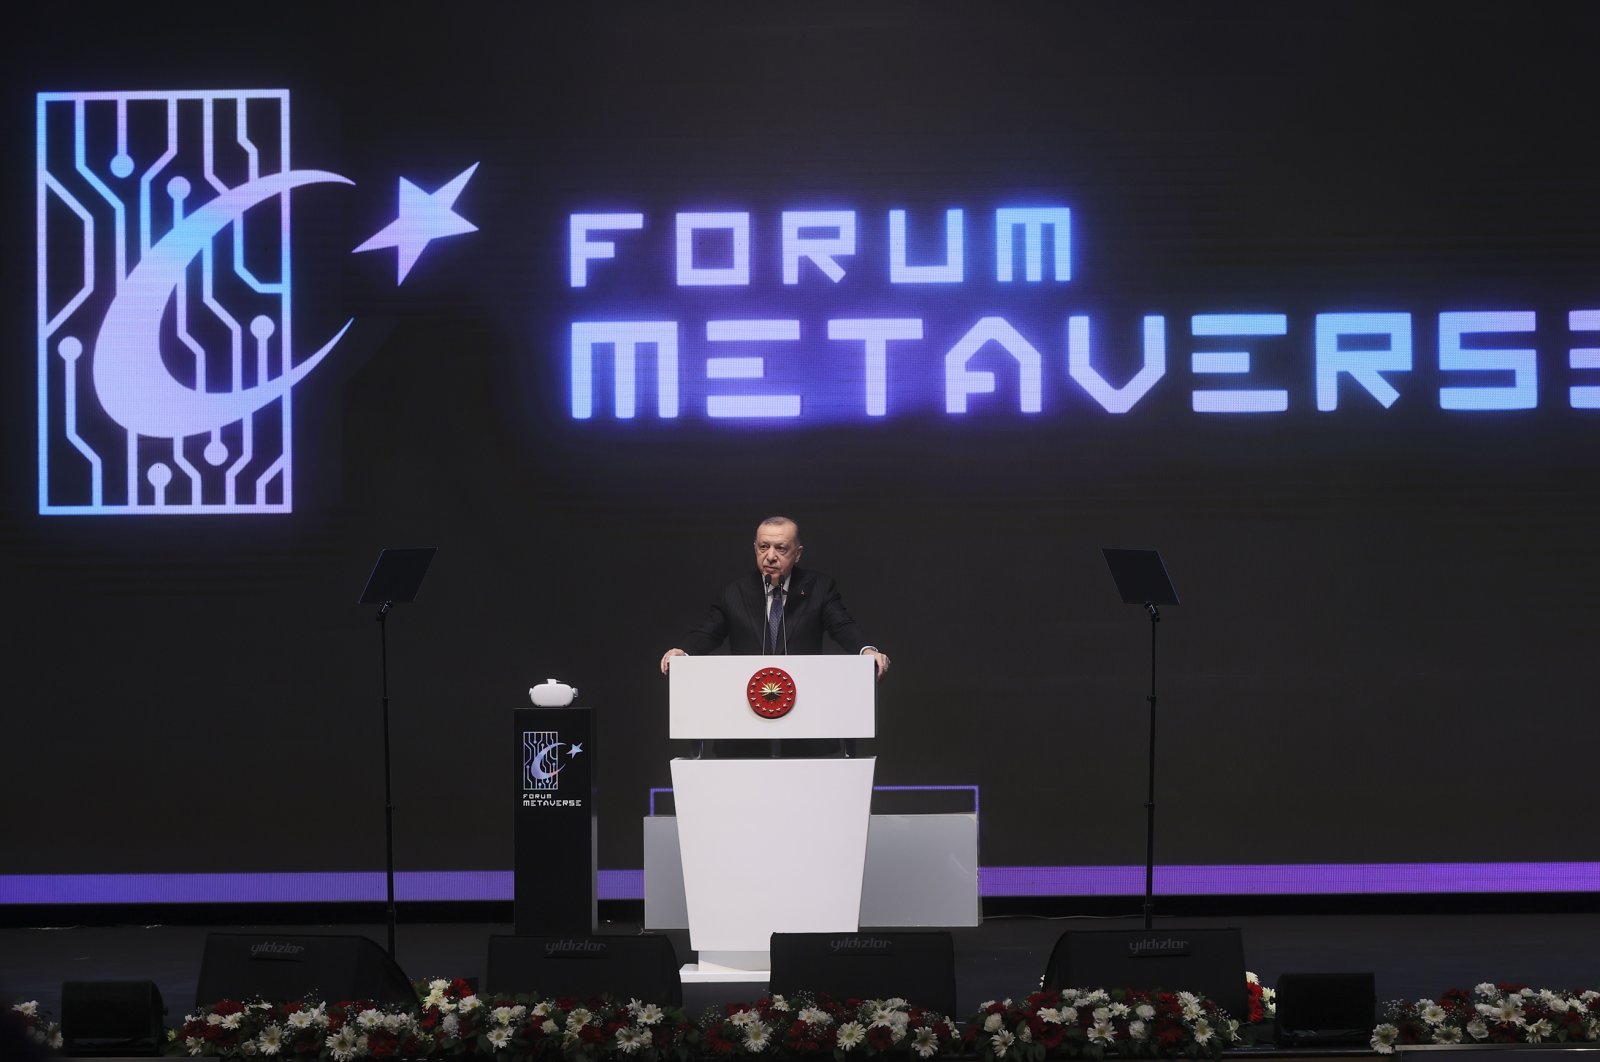 President Recep Tayyip Erdoğan speaks at the Forum Metaverse held in Ankara, Turkey, March 21, 2022. (AA Photo)